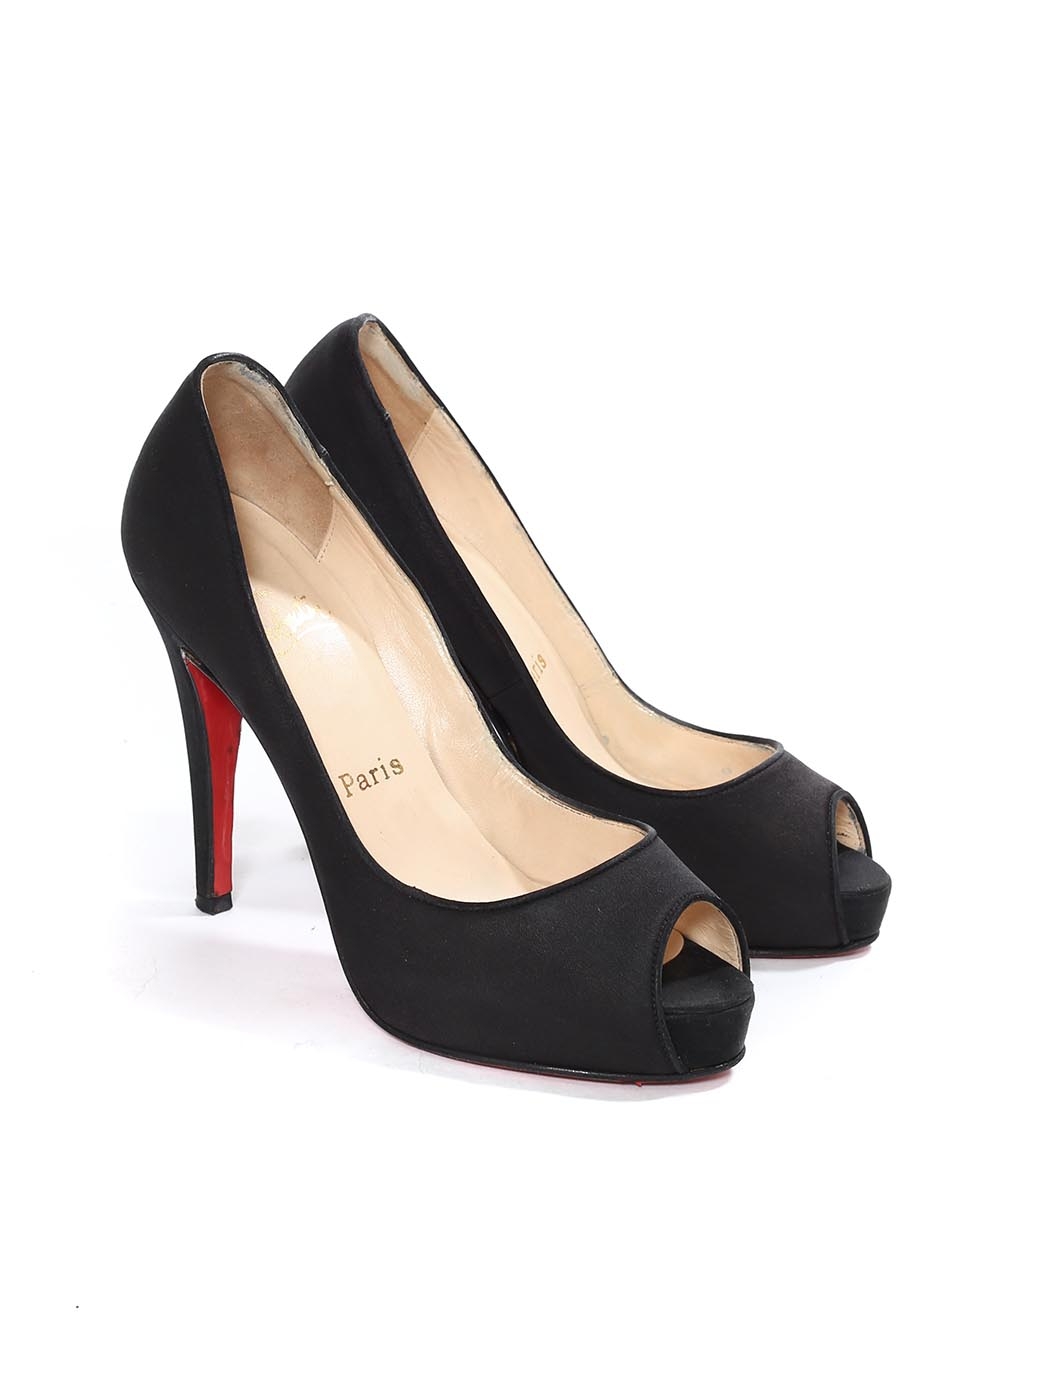 CHRISTIAN LOUBOUTIN Black high heel peep toe pumps Retail €550 Size 35.5